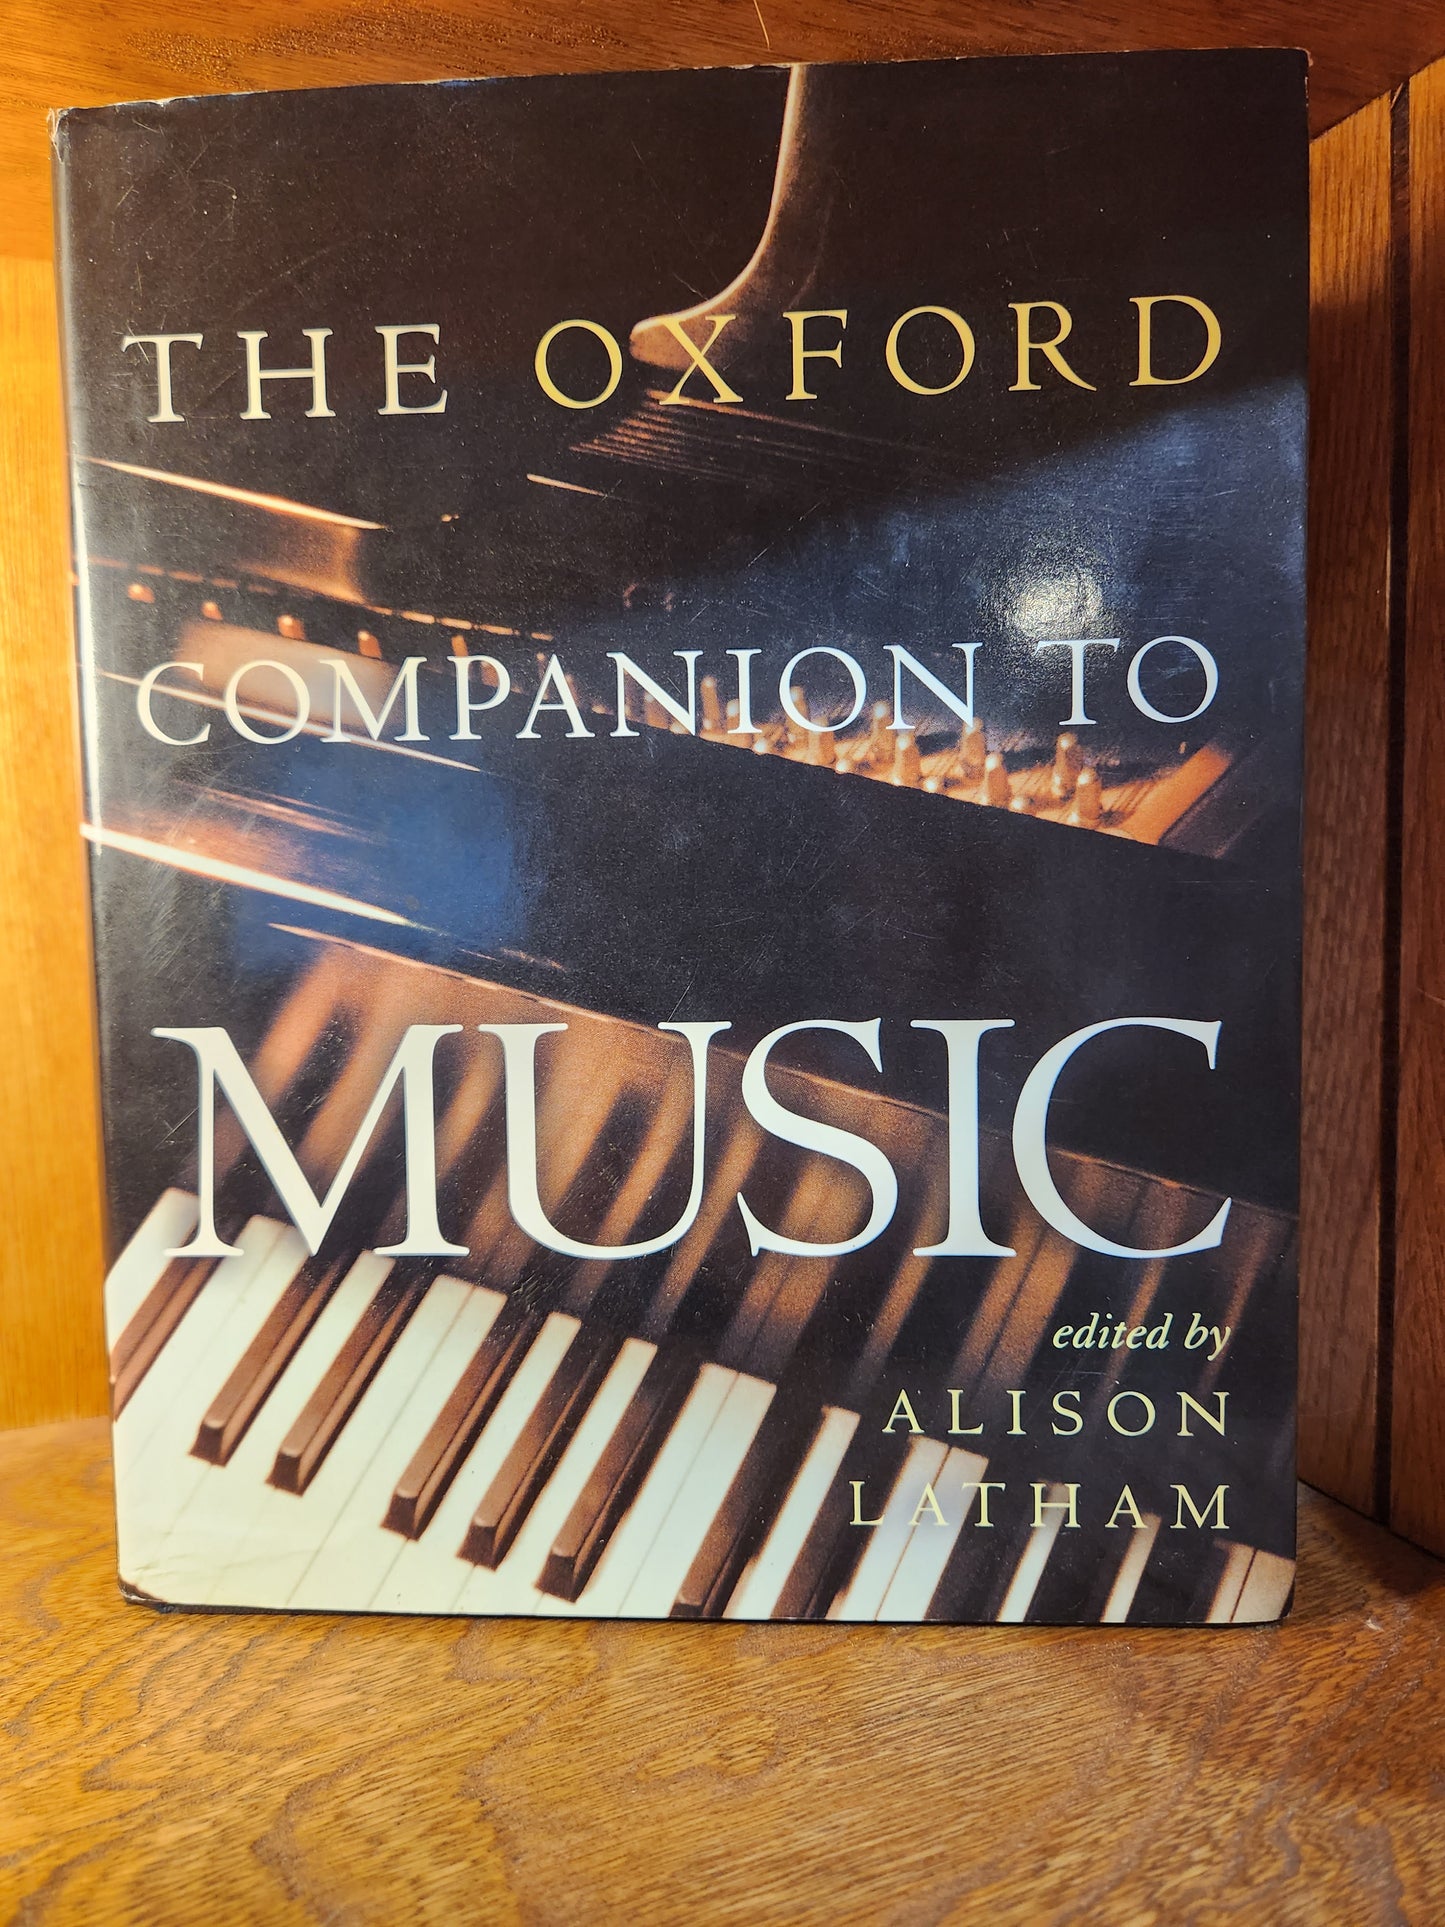 "The Oxford Companion to Music" edited by Alison Latham - Dead Tree Dreams Bookstore